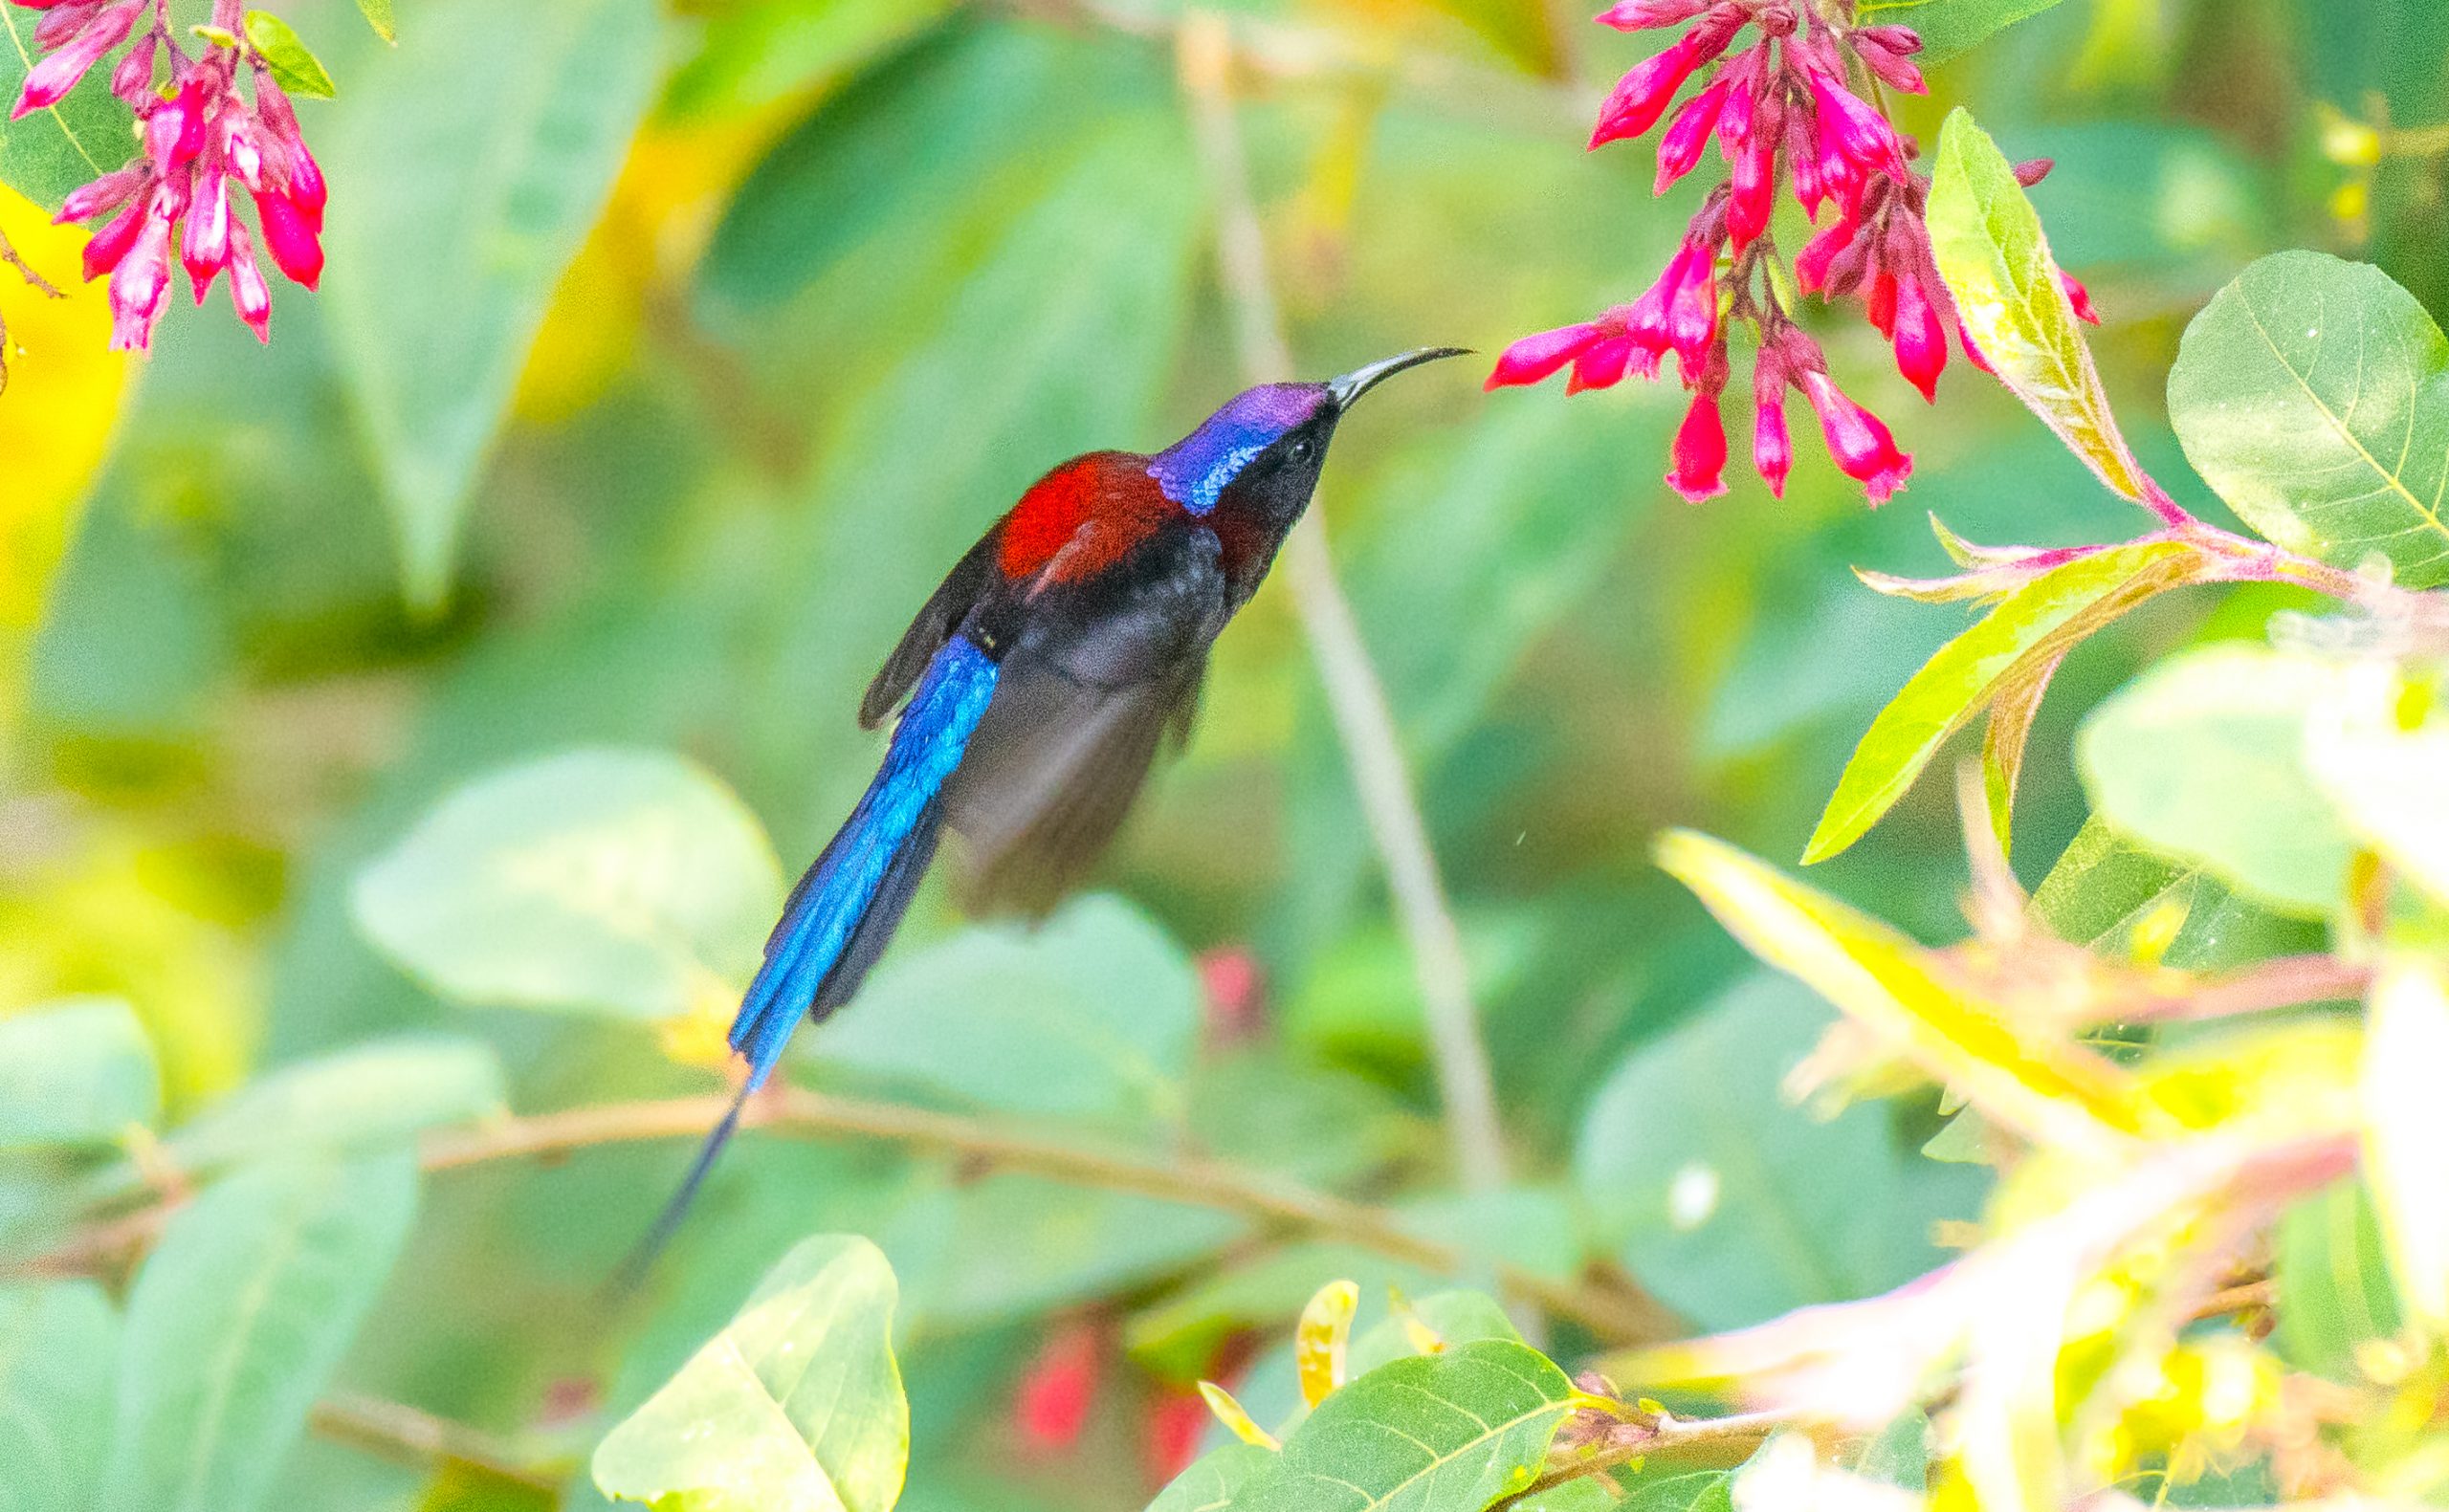 bird feeding on nectar